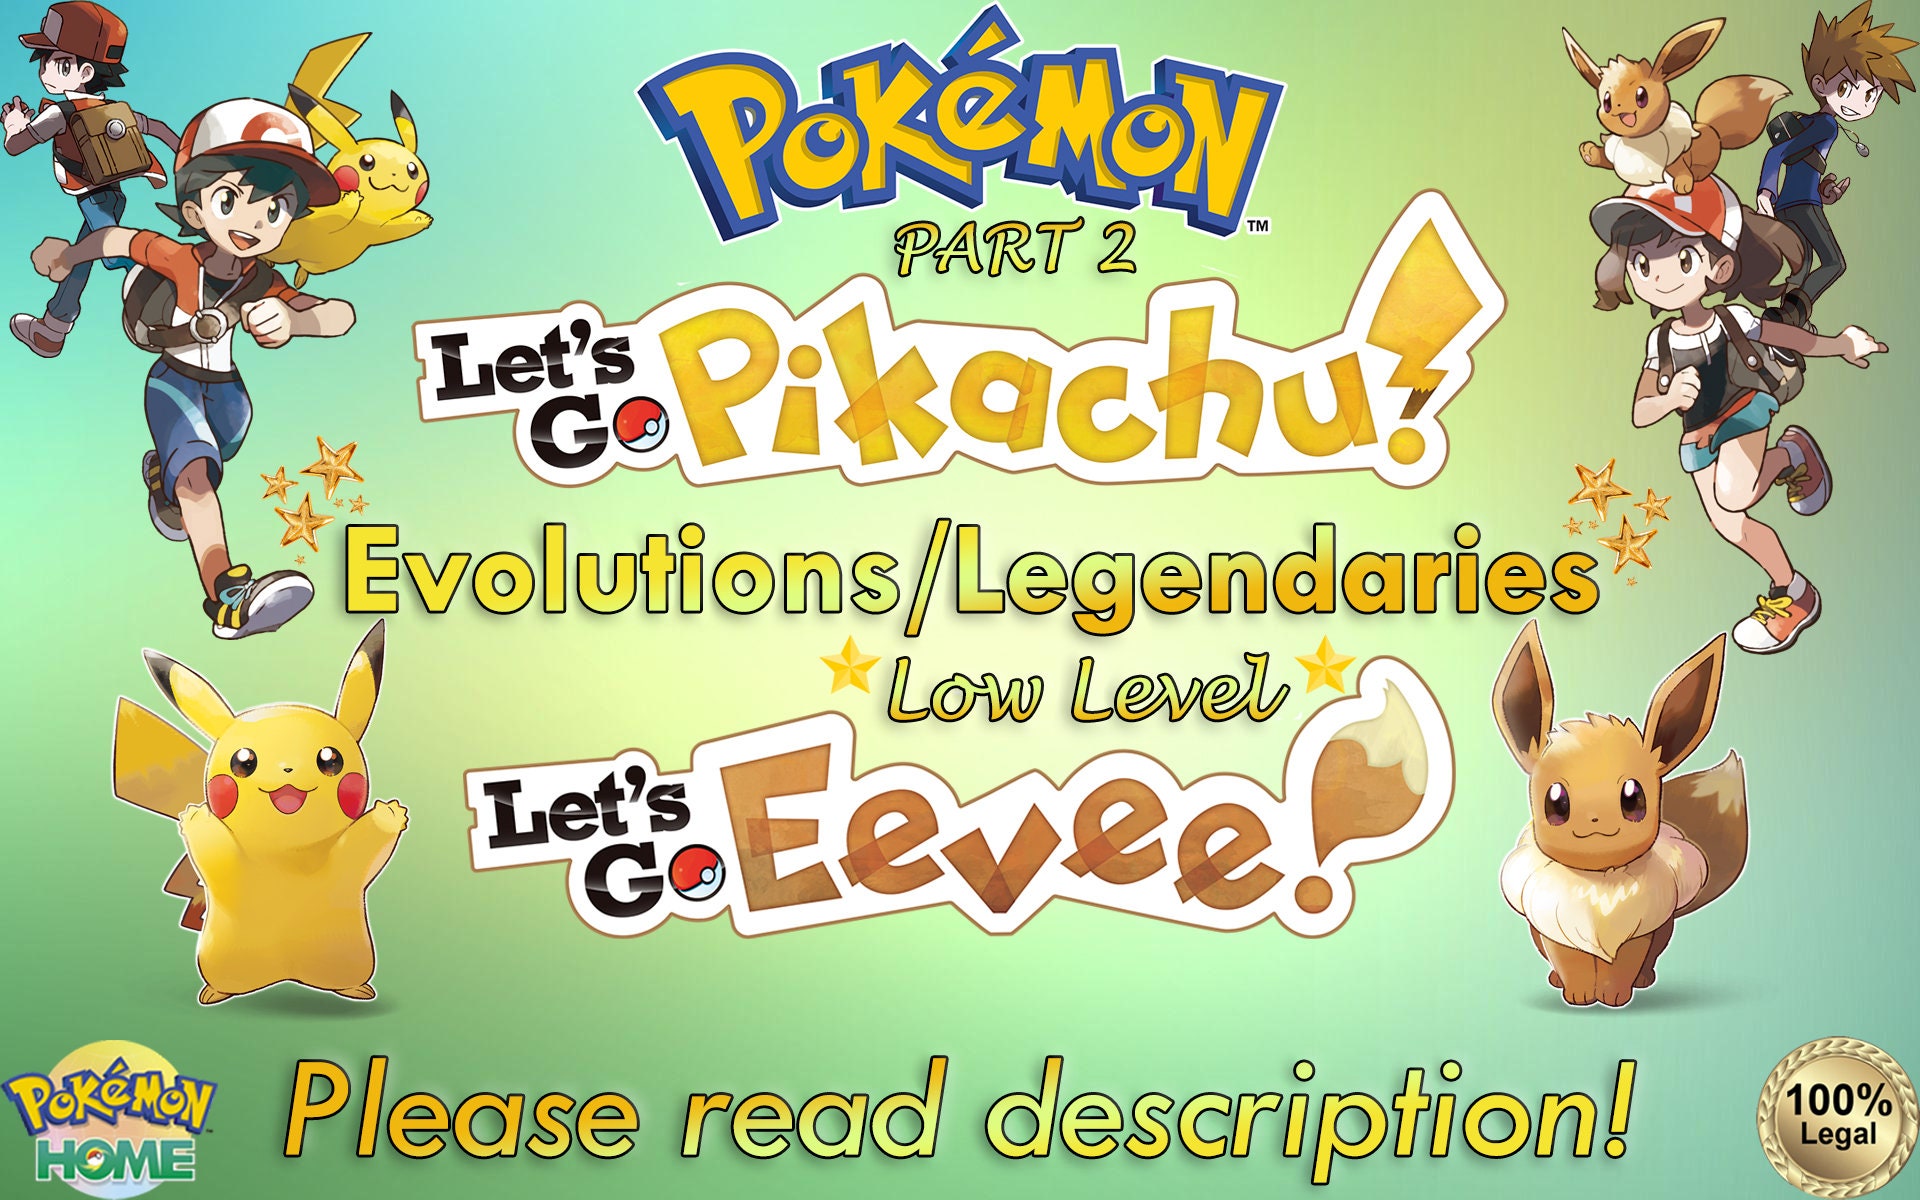 Pokemon Let's Go Pikachu/Eevee MEW Pokeball Plus Ver Lv.1 6IV